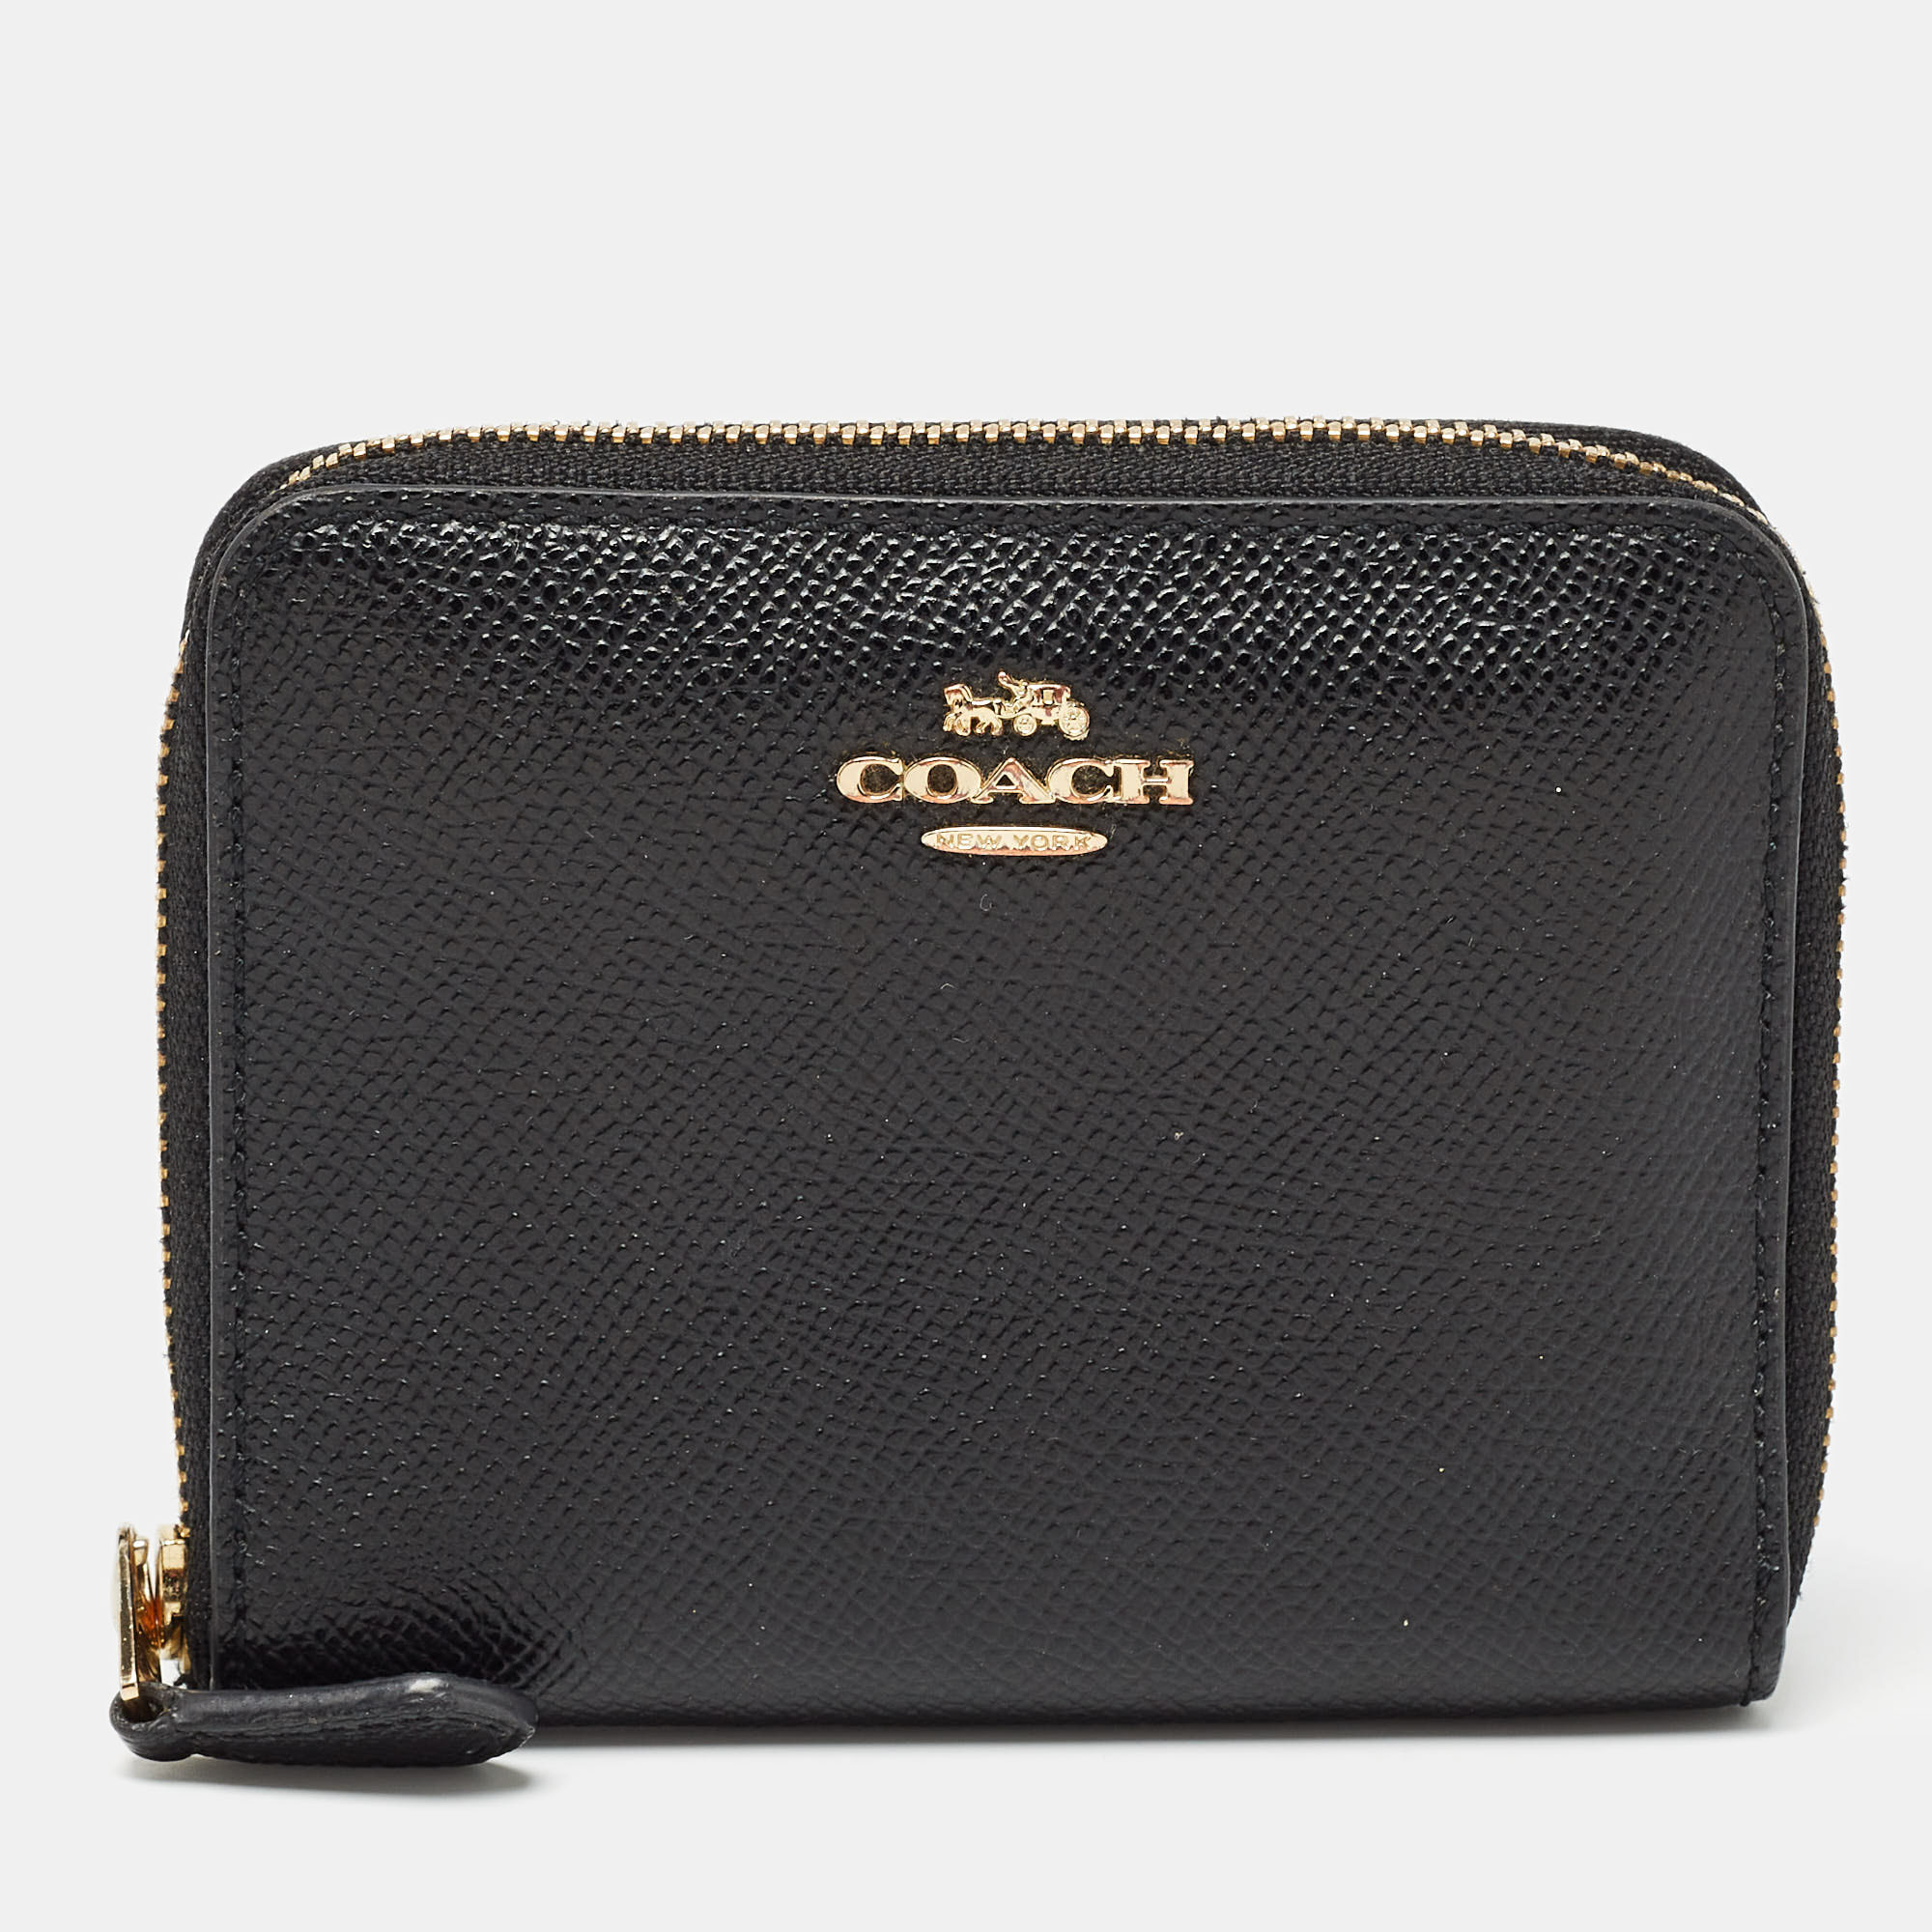 Coach black leather zip around purse